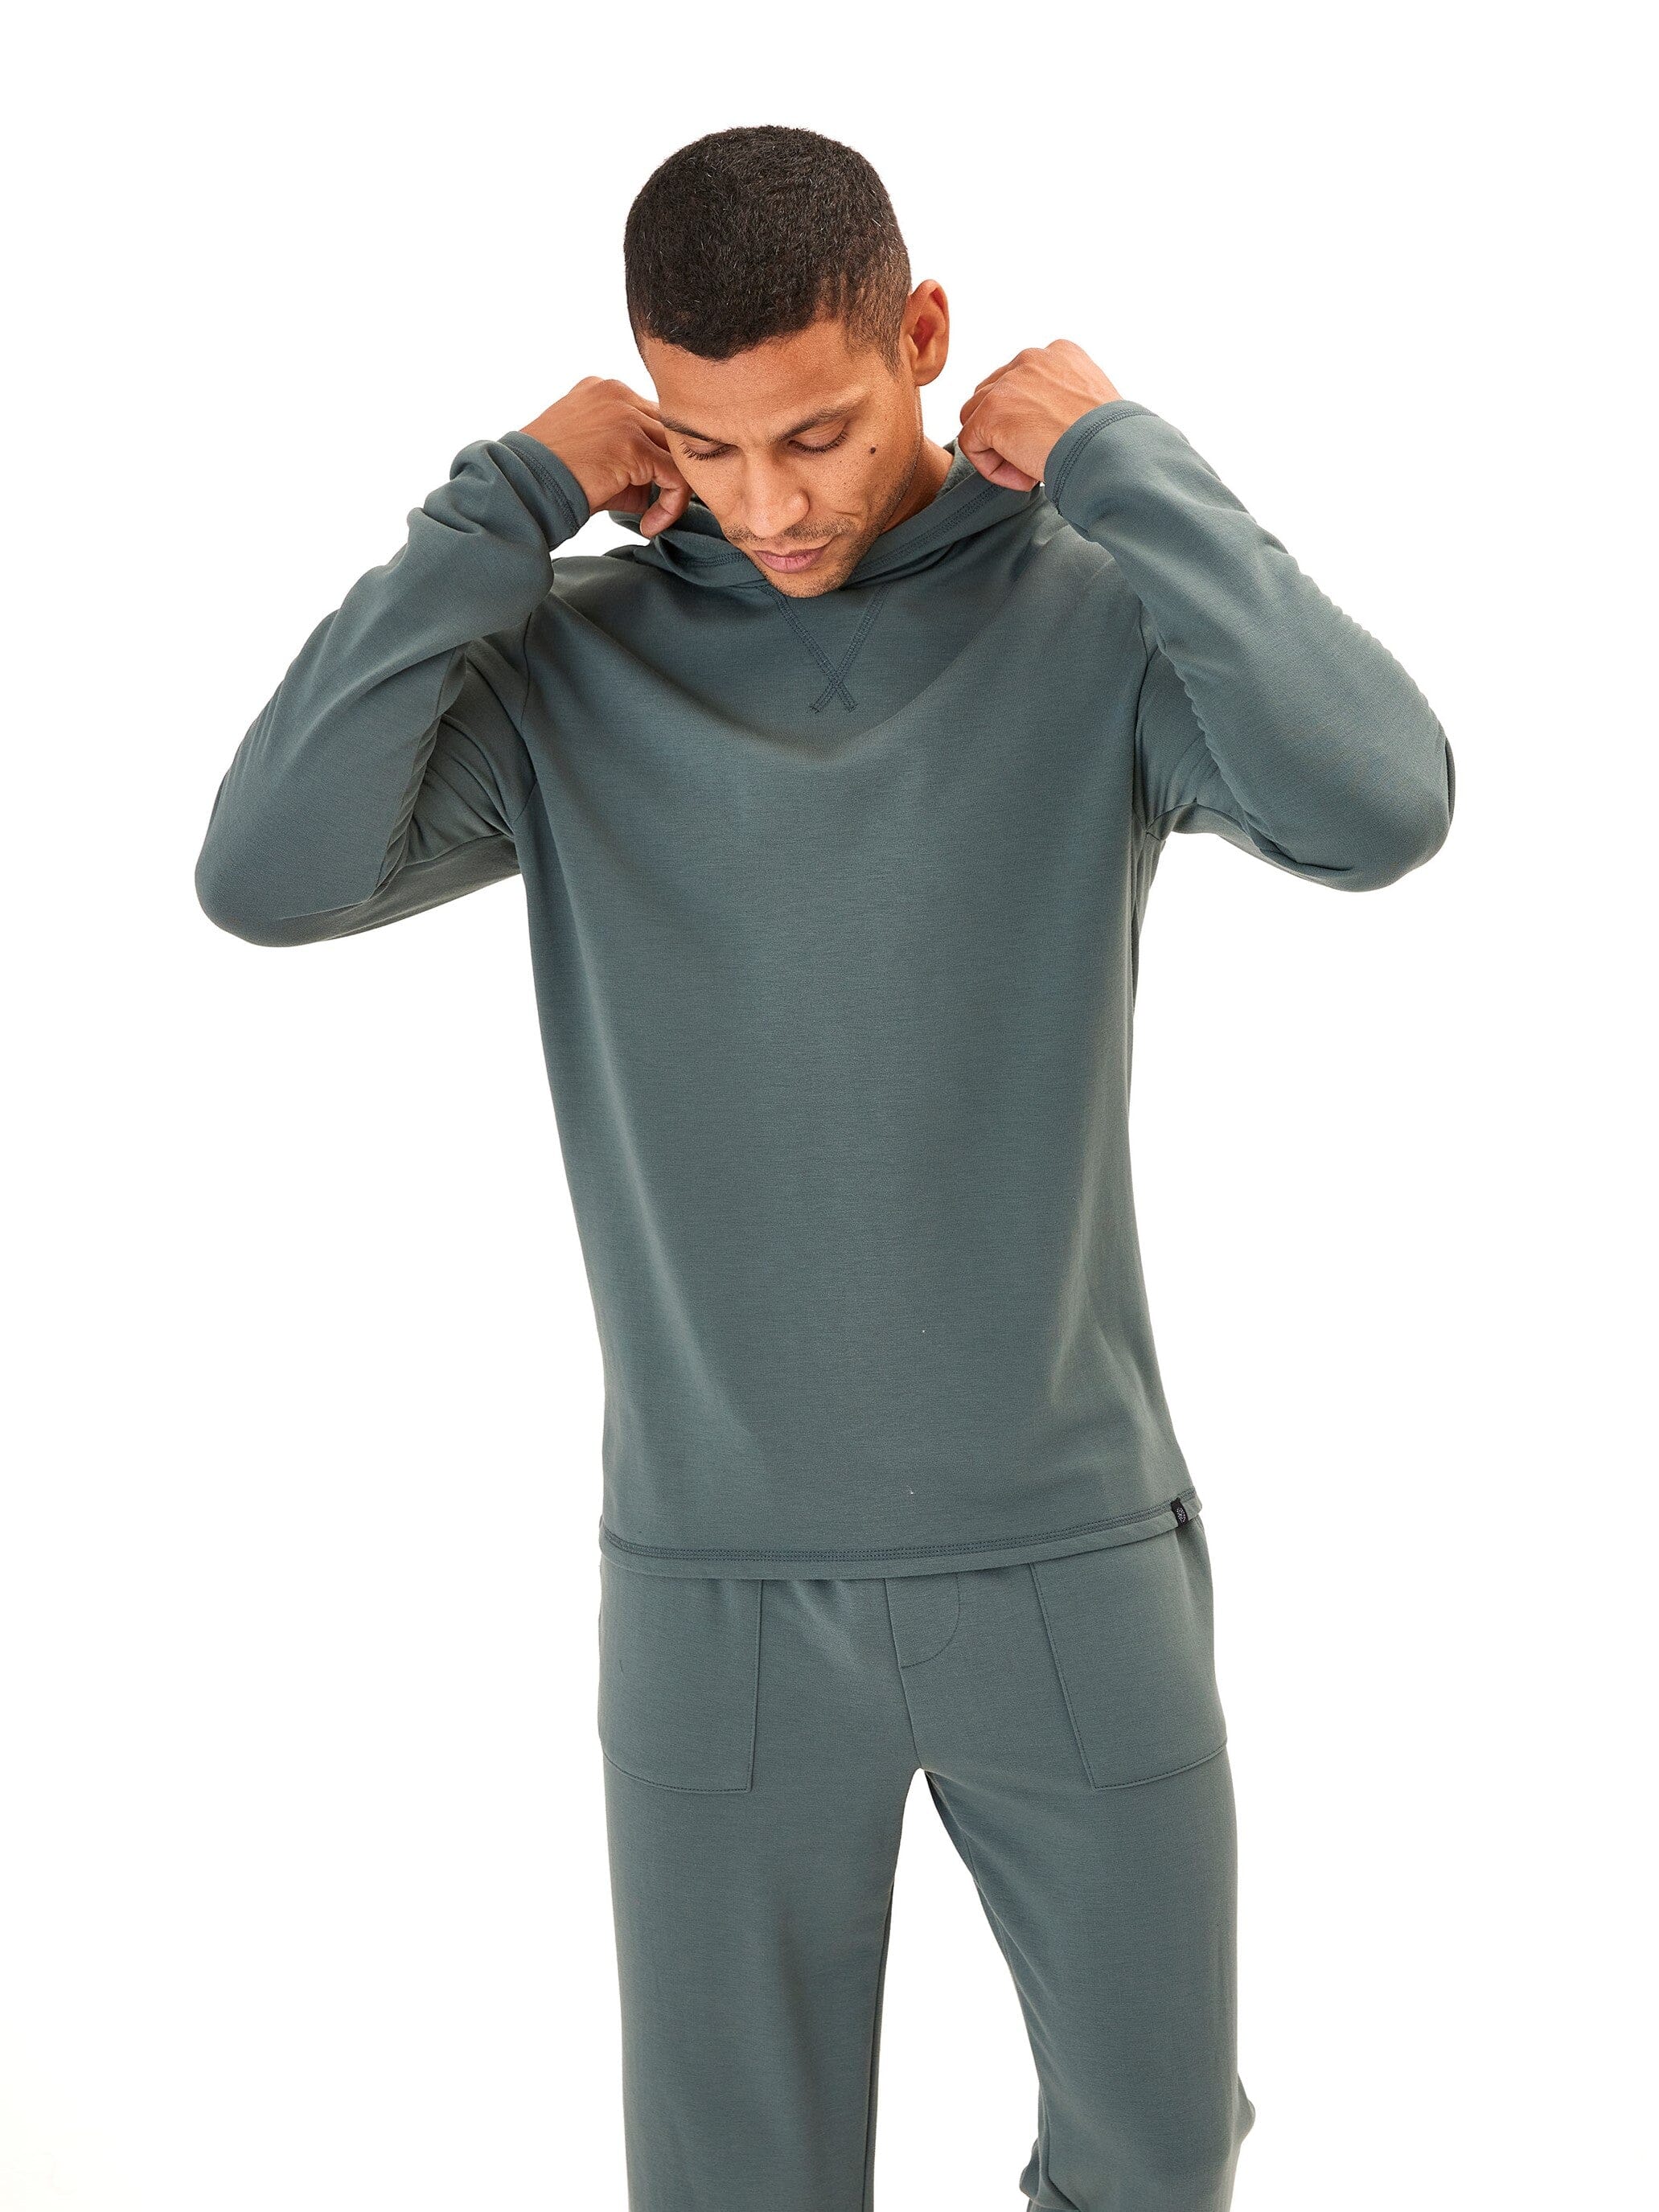 Dex Modal Fleece Pullover Hoodie Mens Outerwear Sweatshirt Threads 4 Thought 